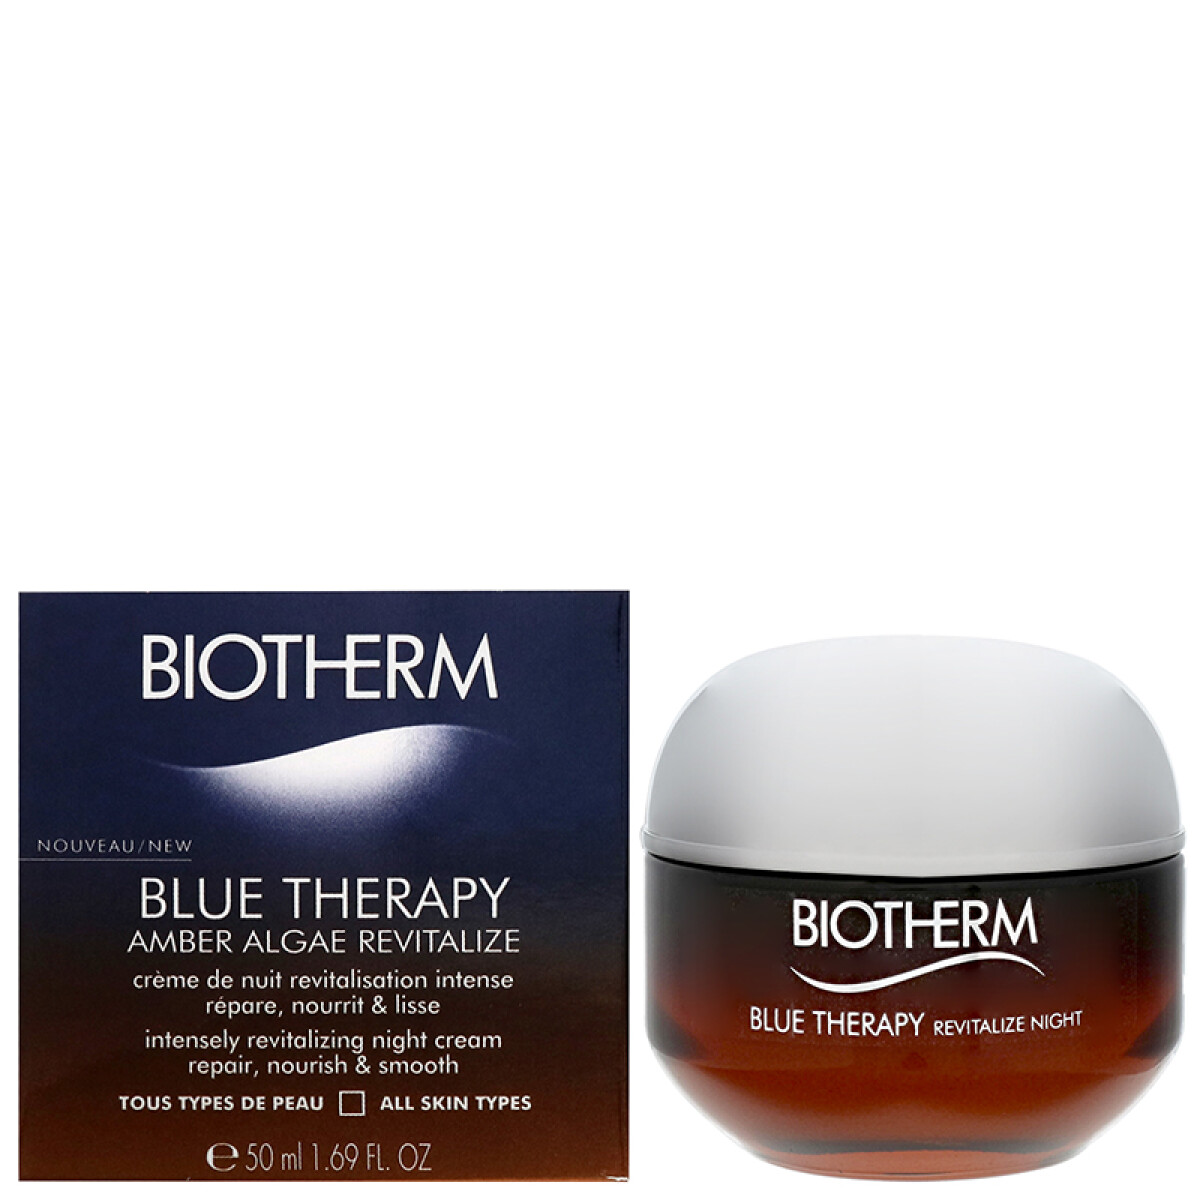 Blue theraphy alga ambar crema anti edad Biotherm - Noche 